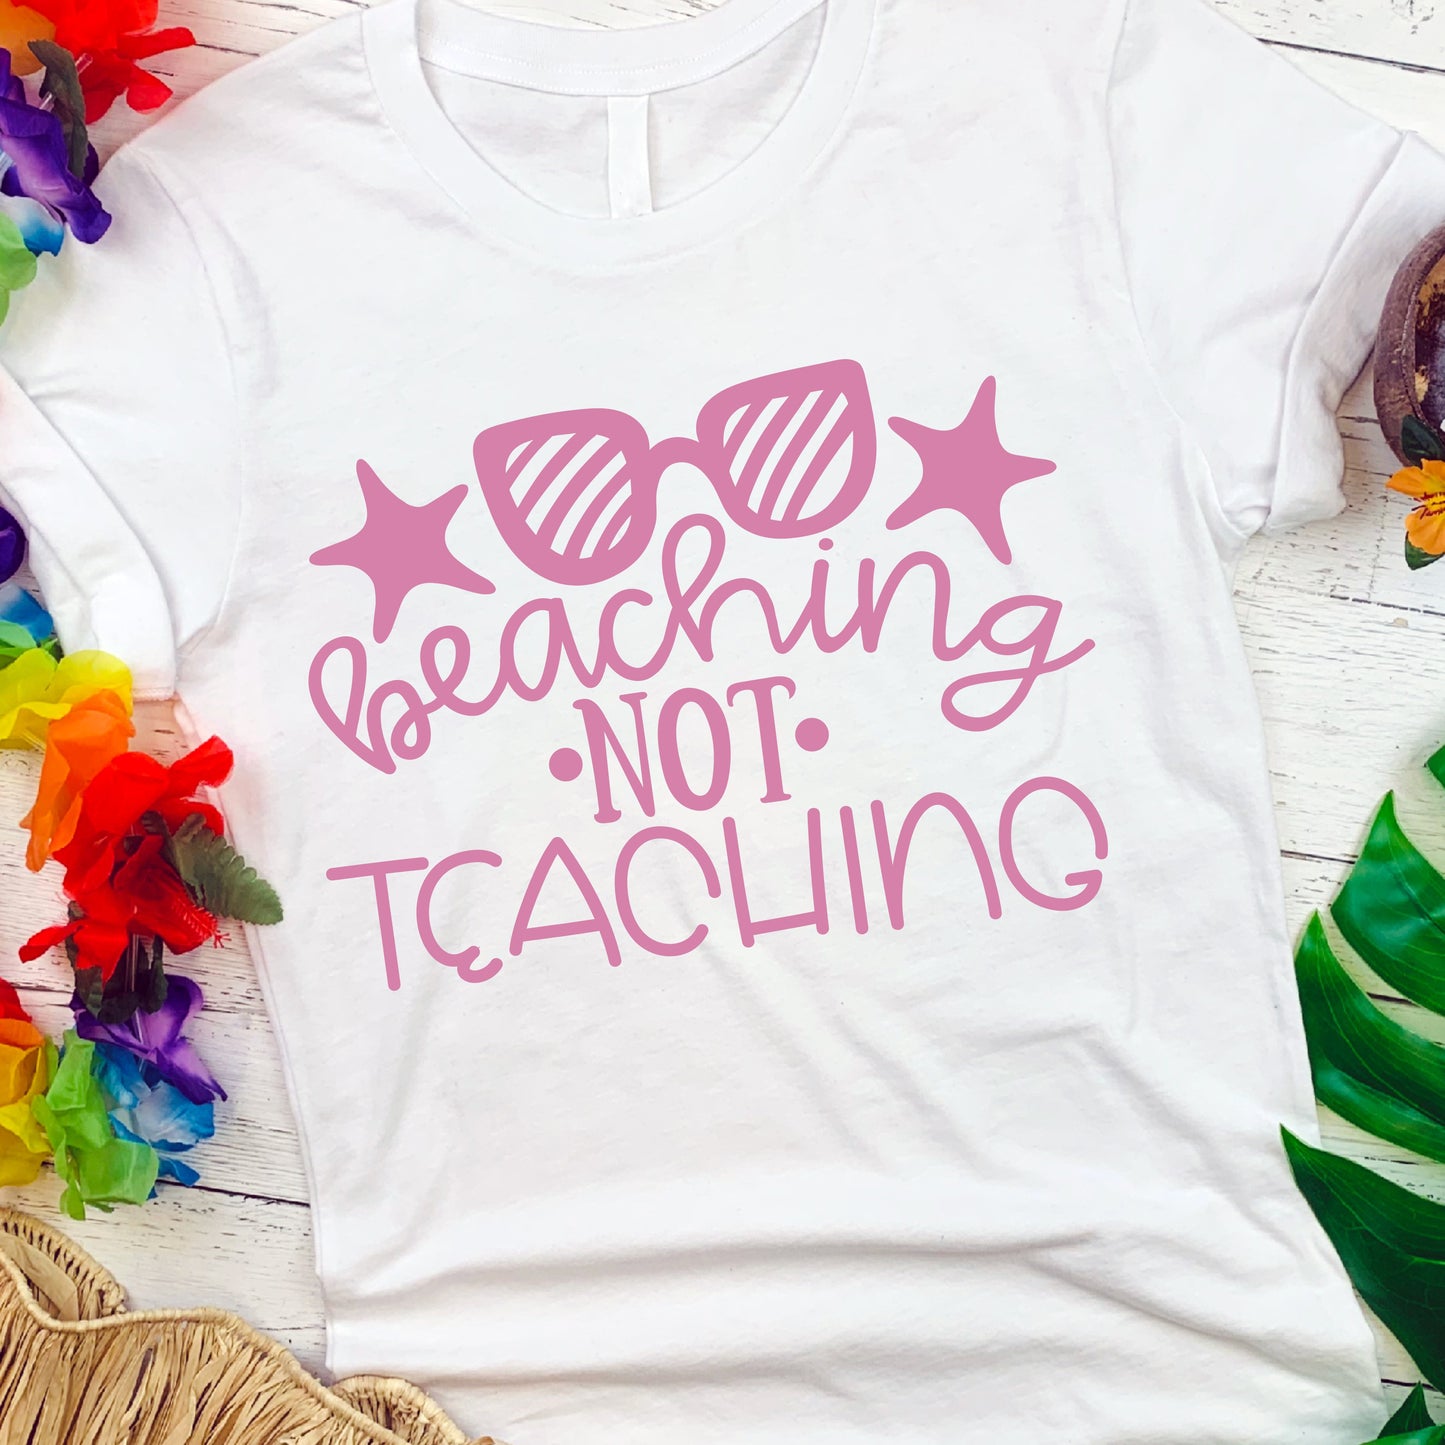 Fun, custom "Beaching not teaching" T-shirt